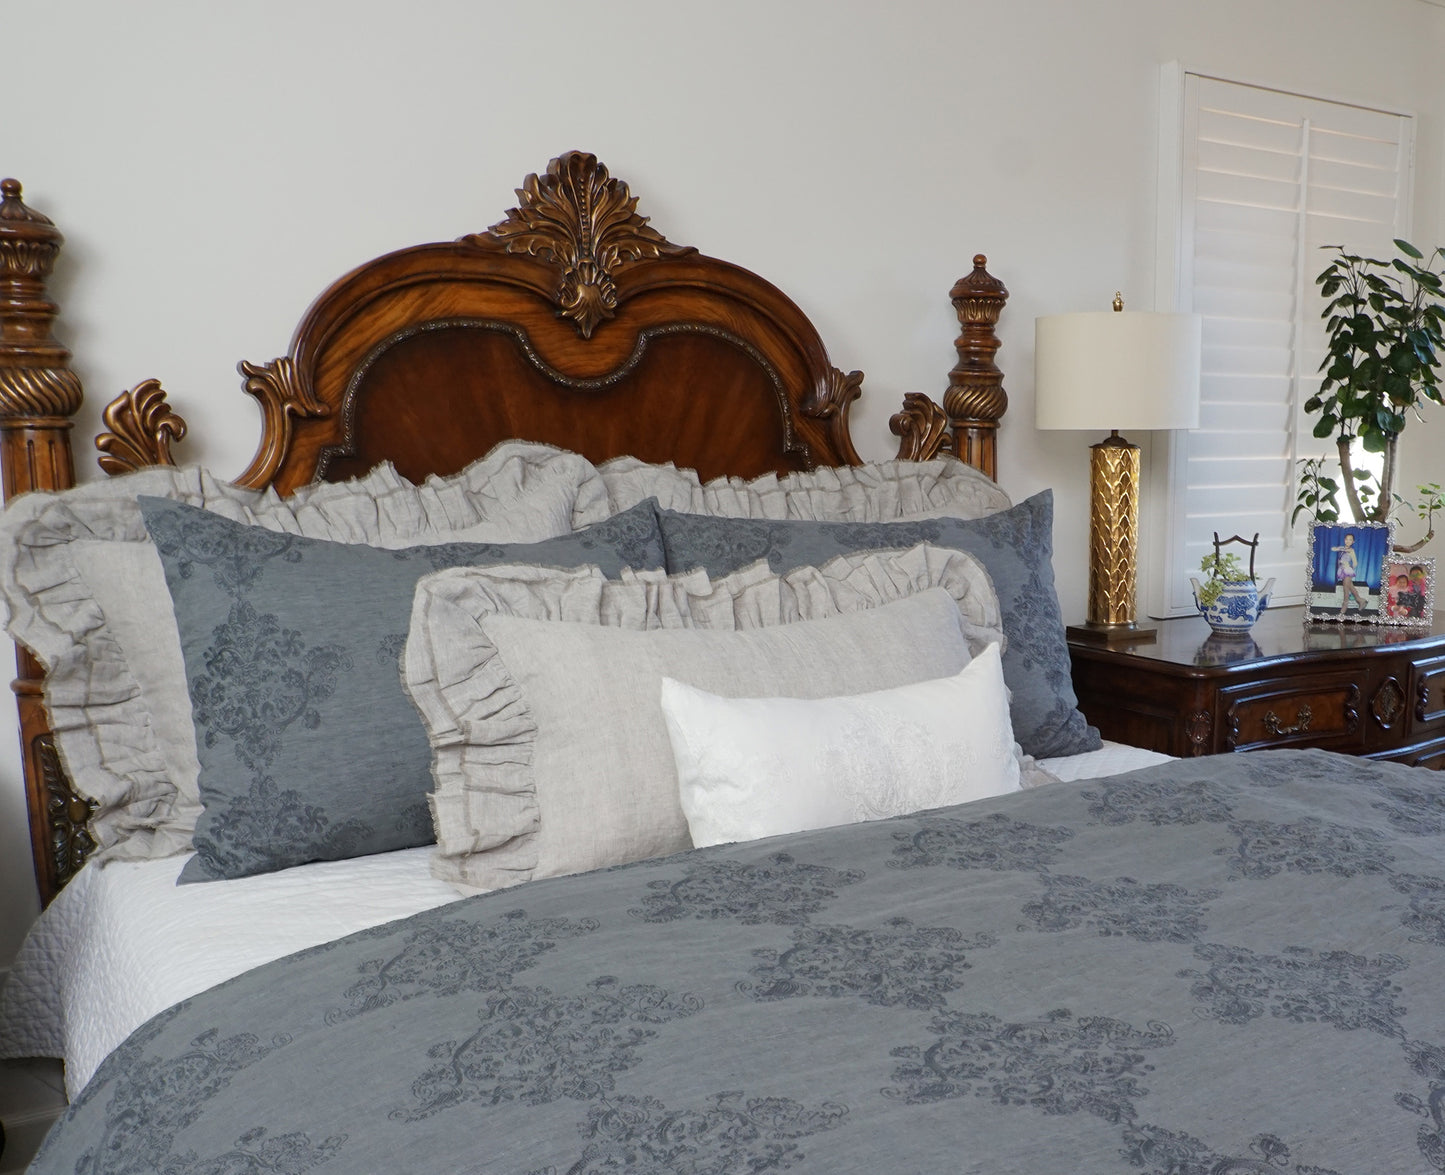 Buy linen duvet cover queen for luxurious bedding